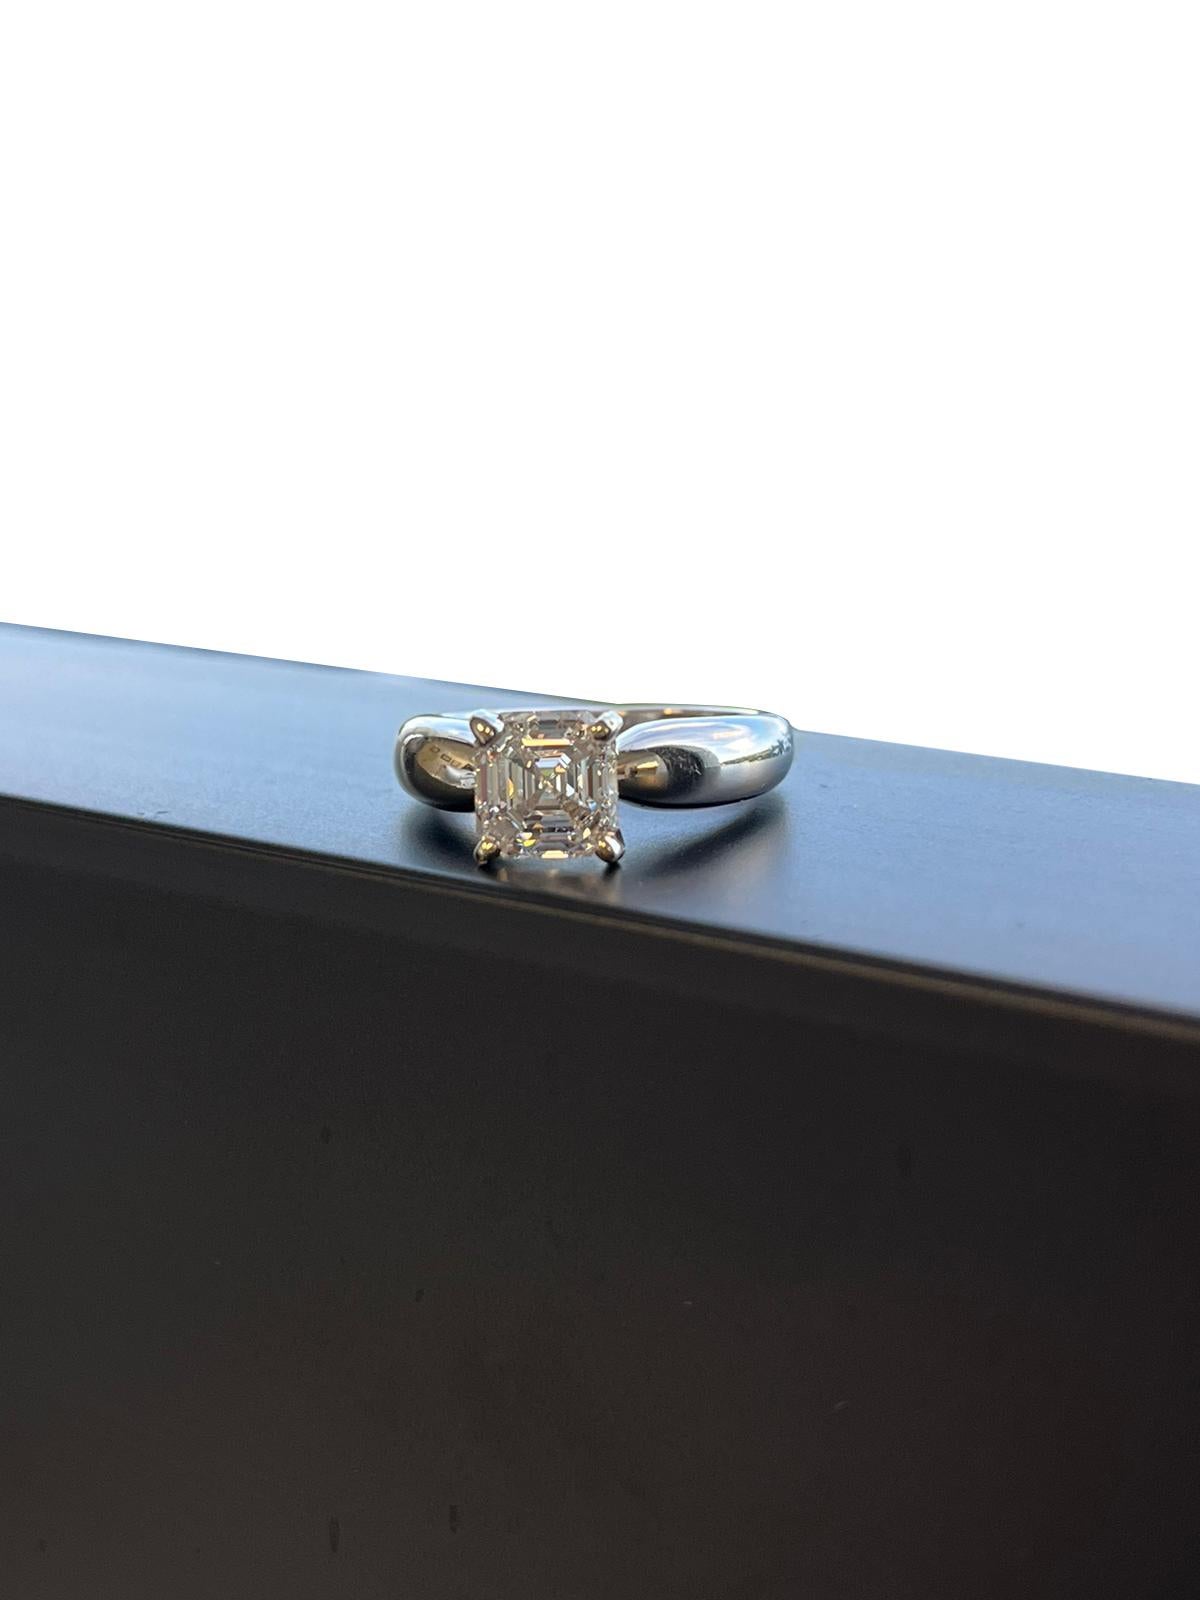 Flawless GIA Certified 2.01 Carat Asscher Cut Diamond Ring 18 Karat White Gold For Sale 4